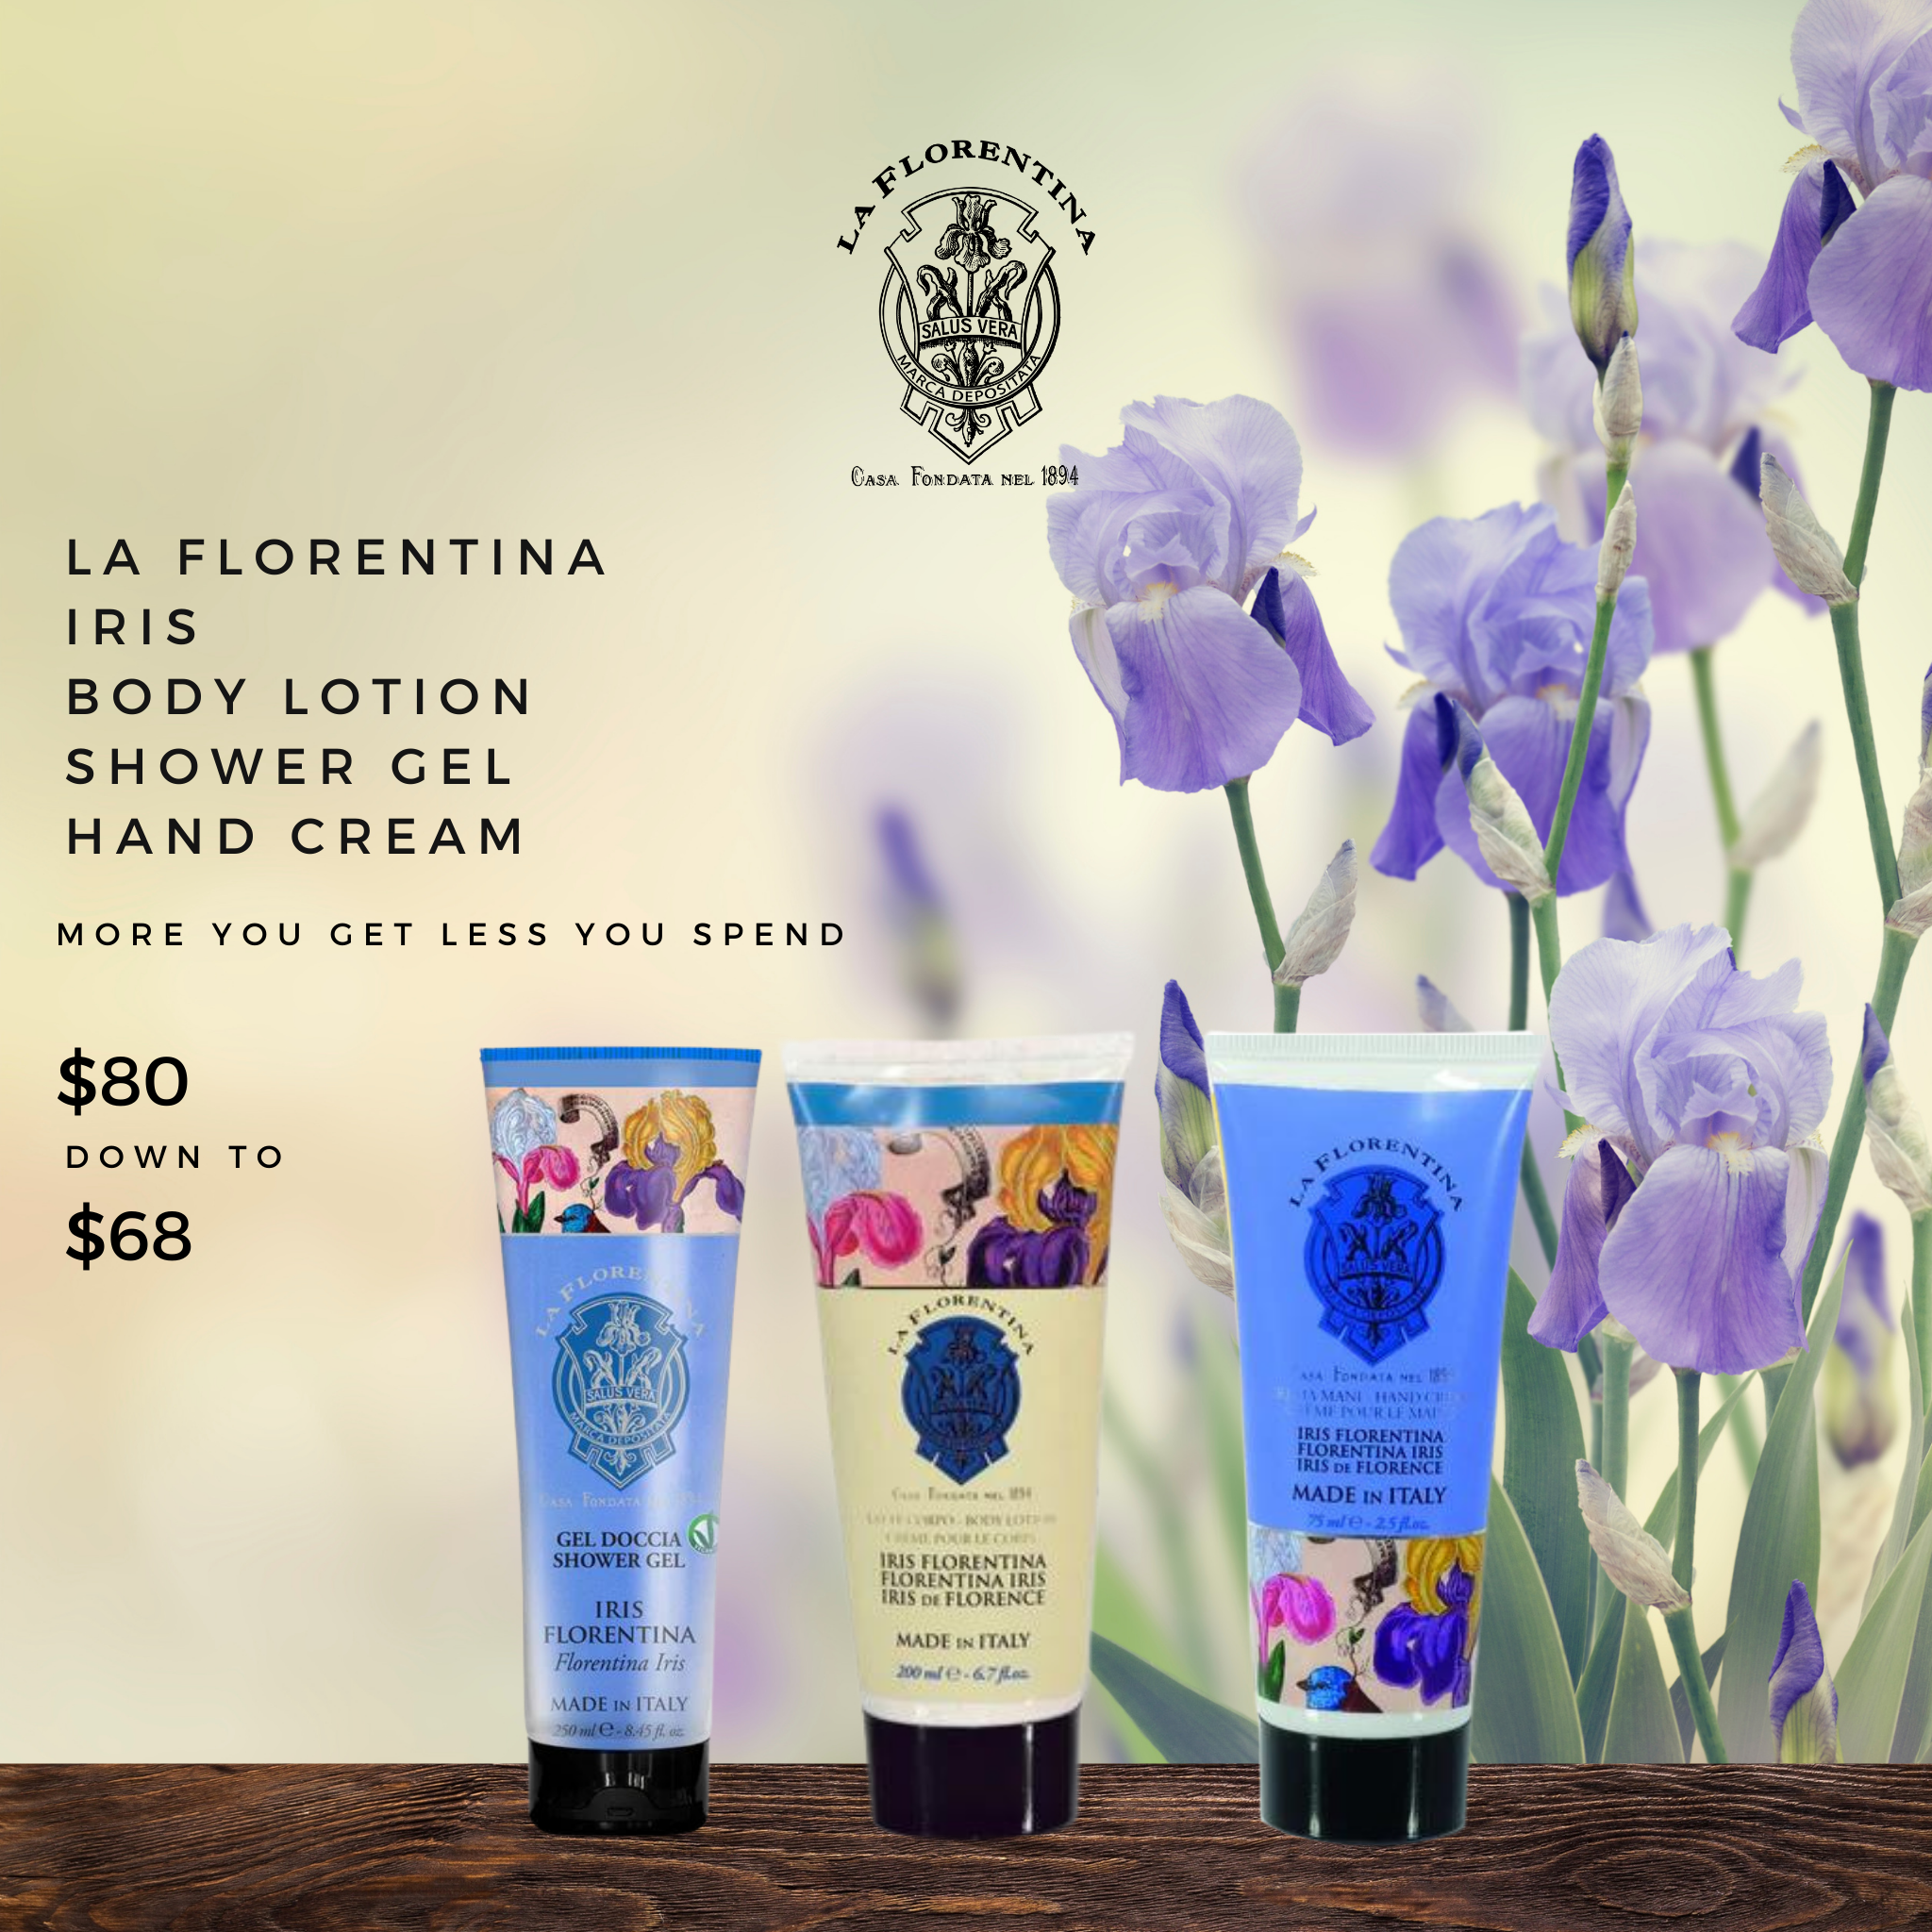 La Florentina Iris Shower Gel, Body Lotion and Hand Cream